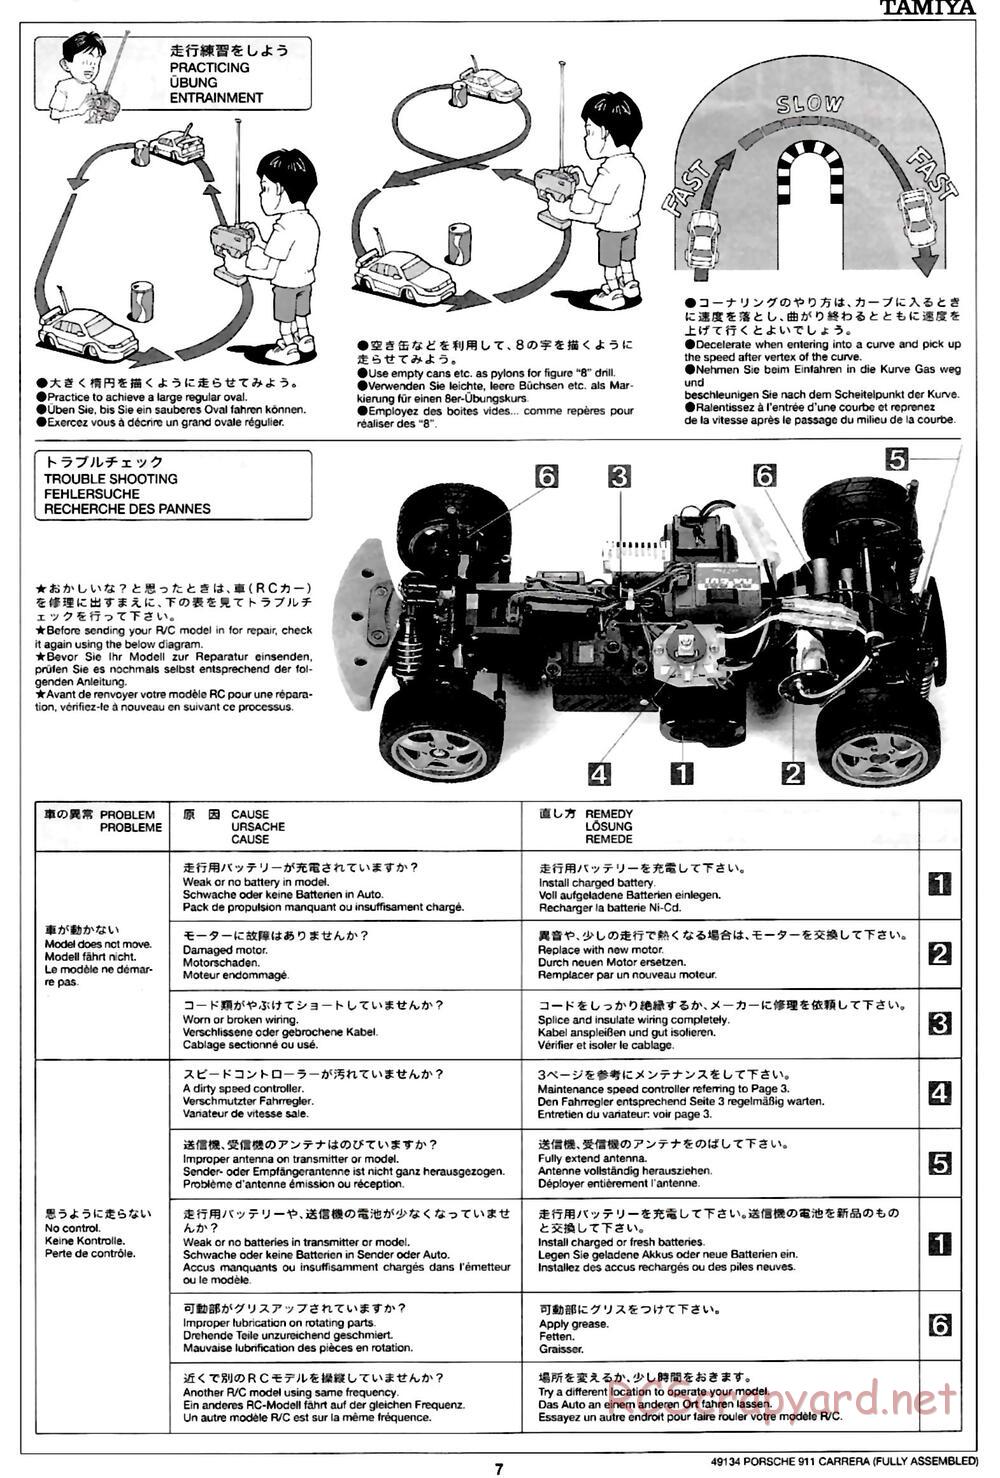 Tamiya - Porsche 911 Carrera - M-04L - Manual - Page 7